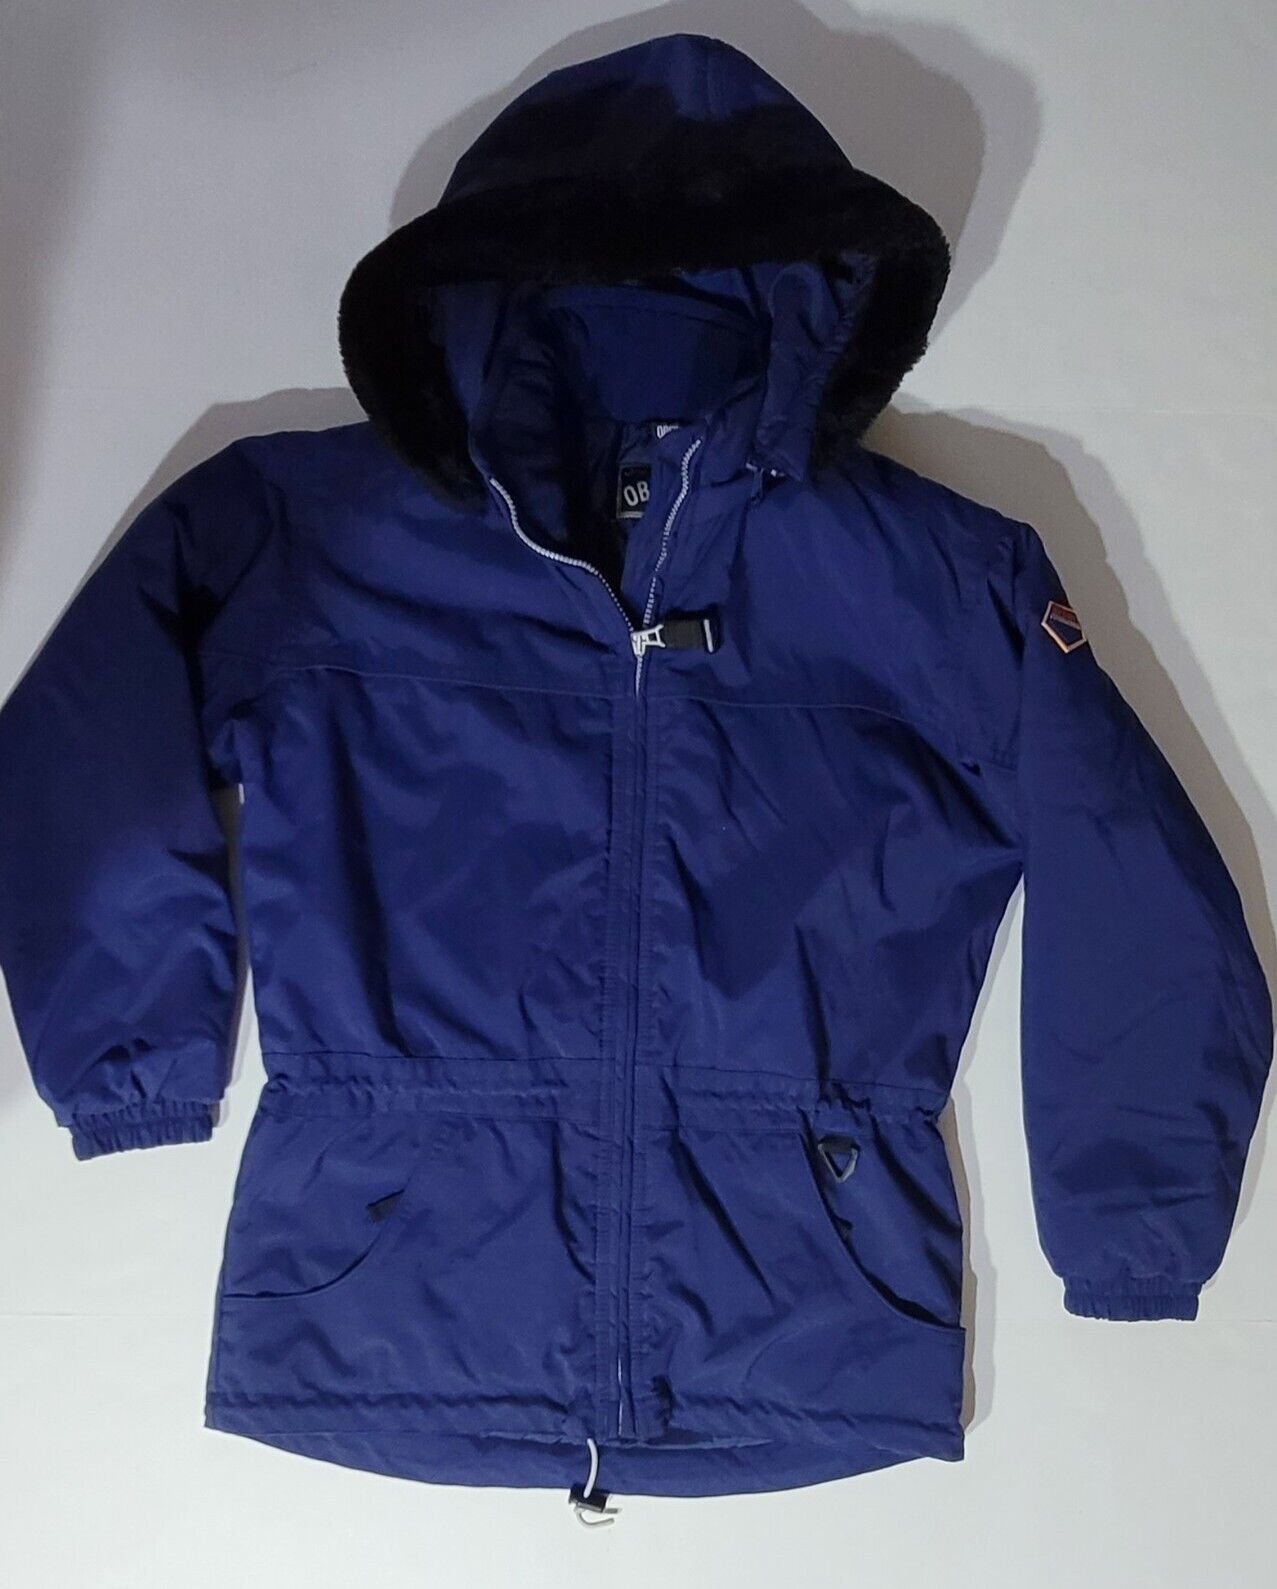 Obermeyer Juniors Ski Jacket Coat Size 14 sport style ; Mary Ann 